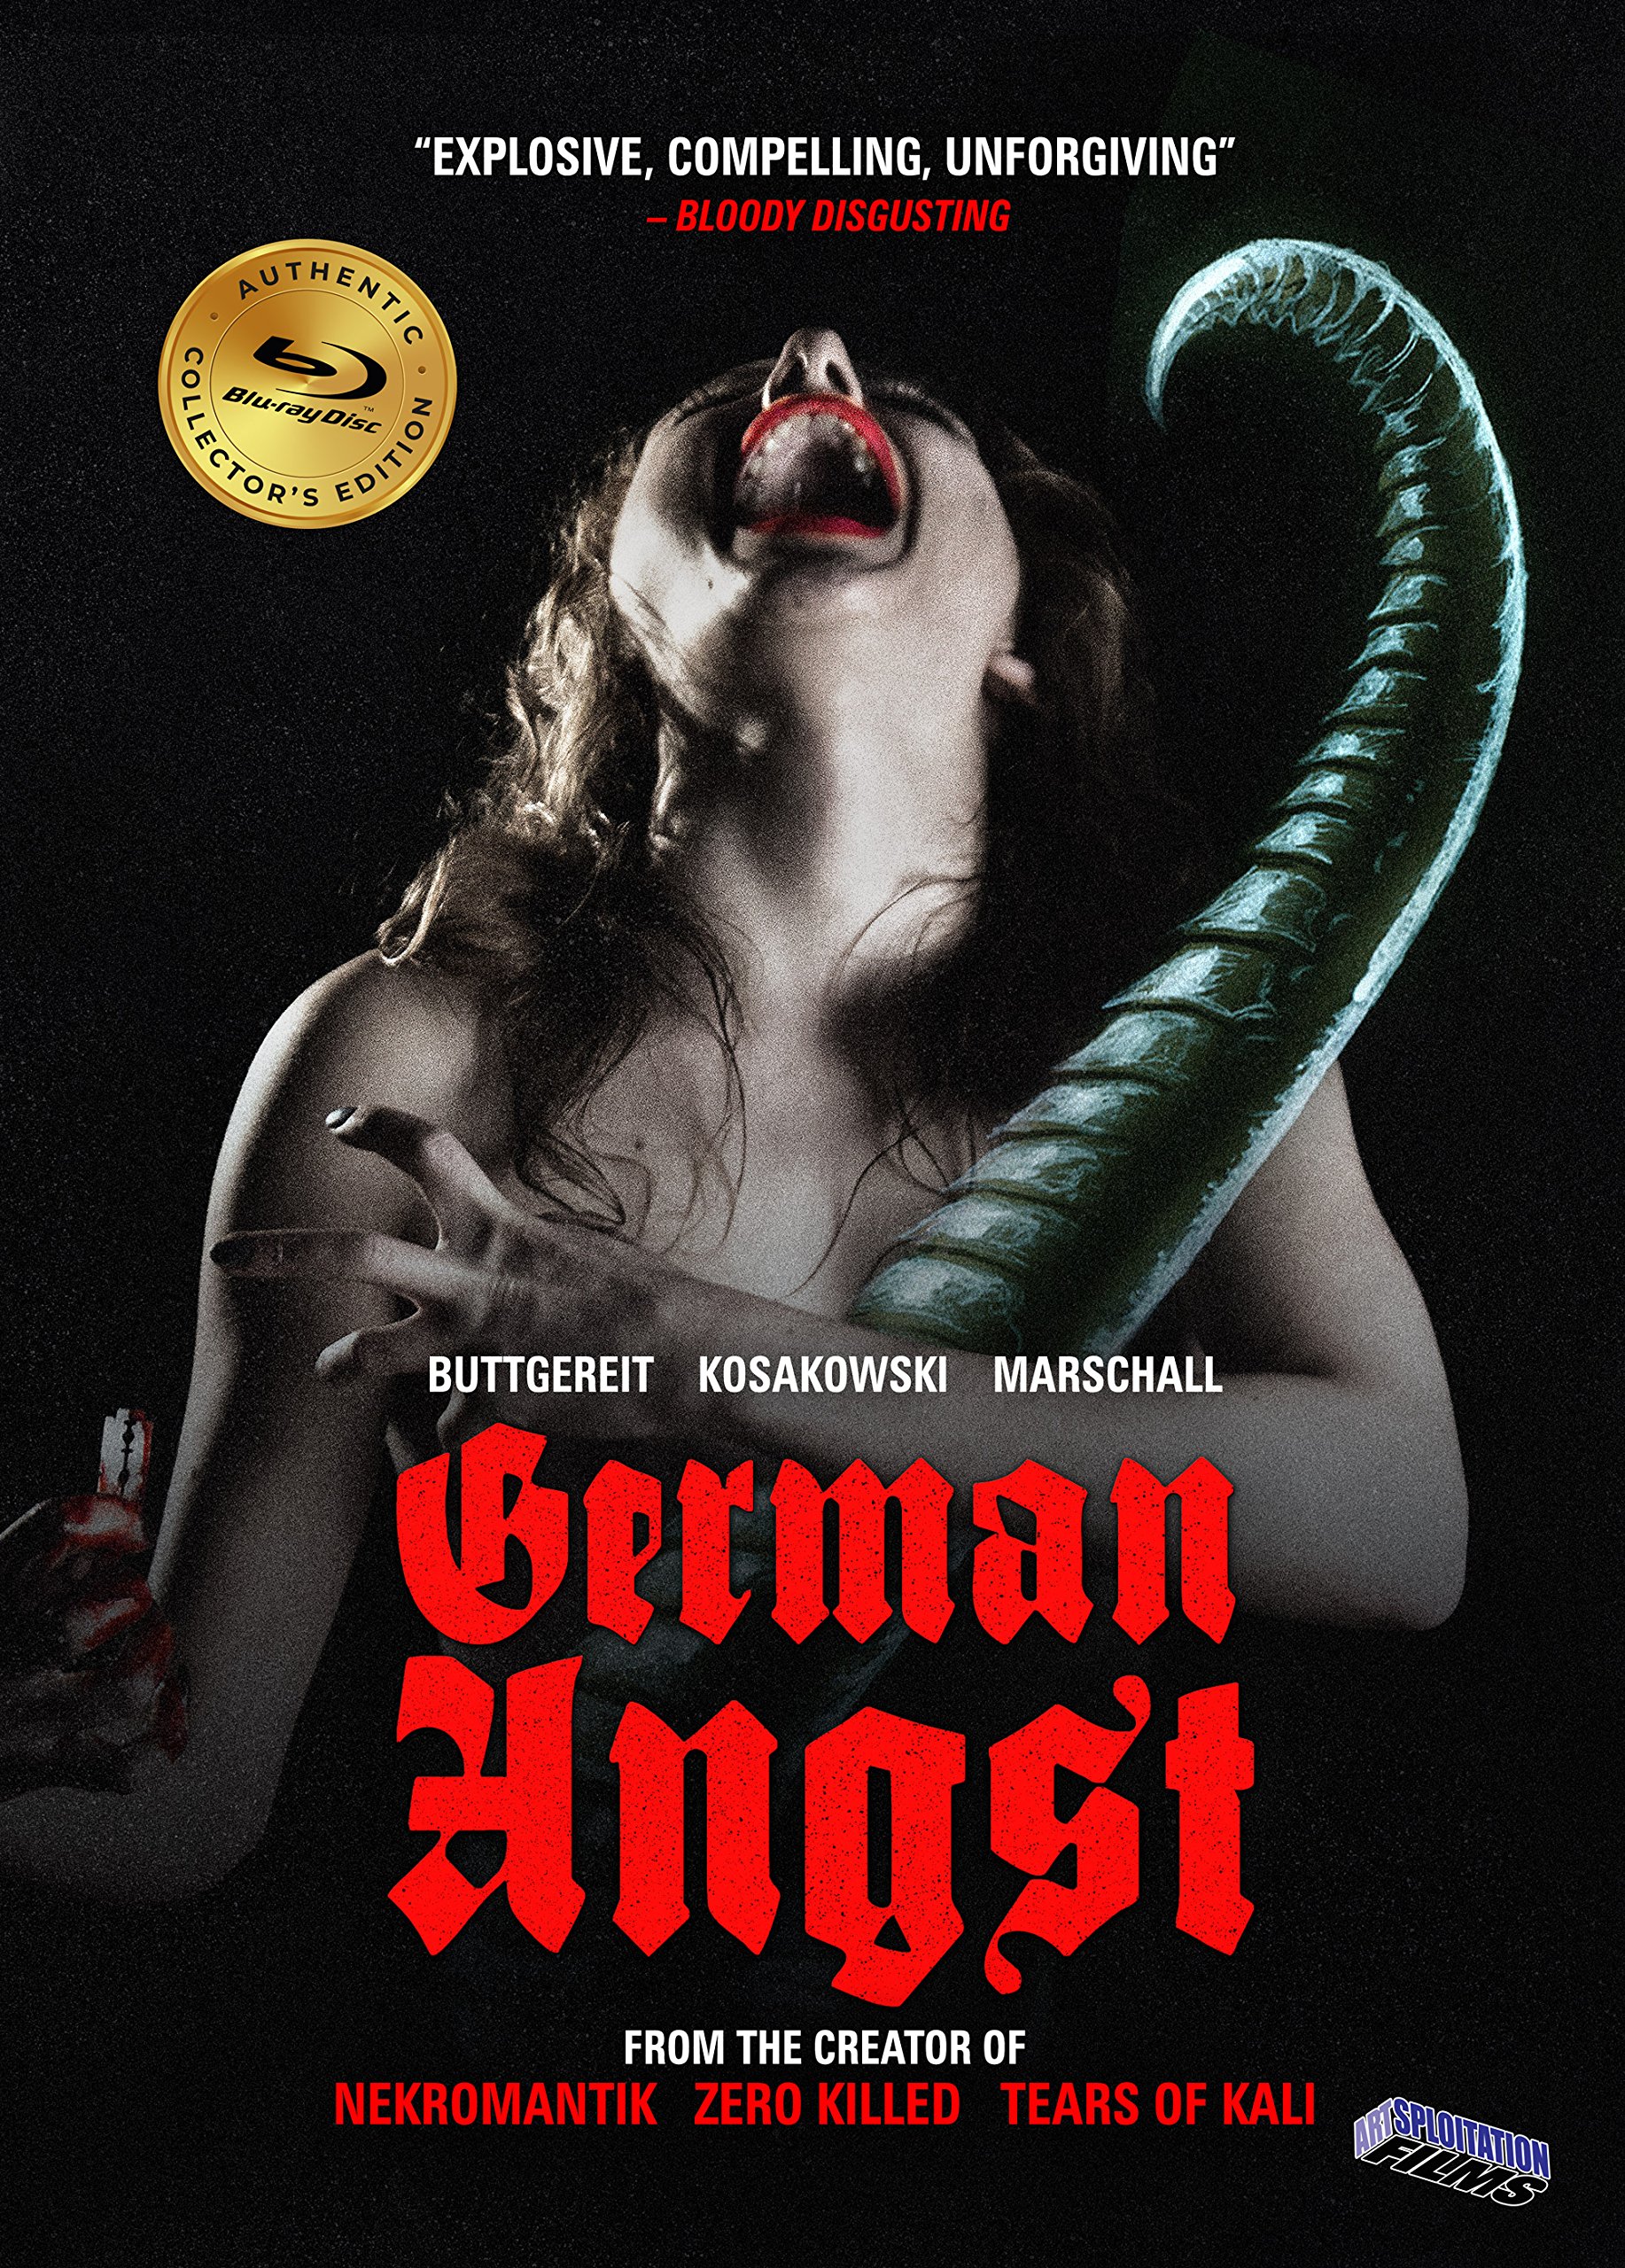 German Angst [Blu-ray]